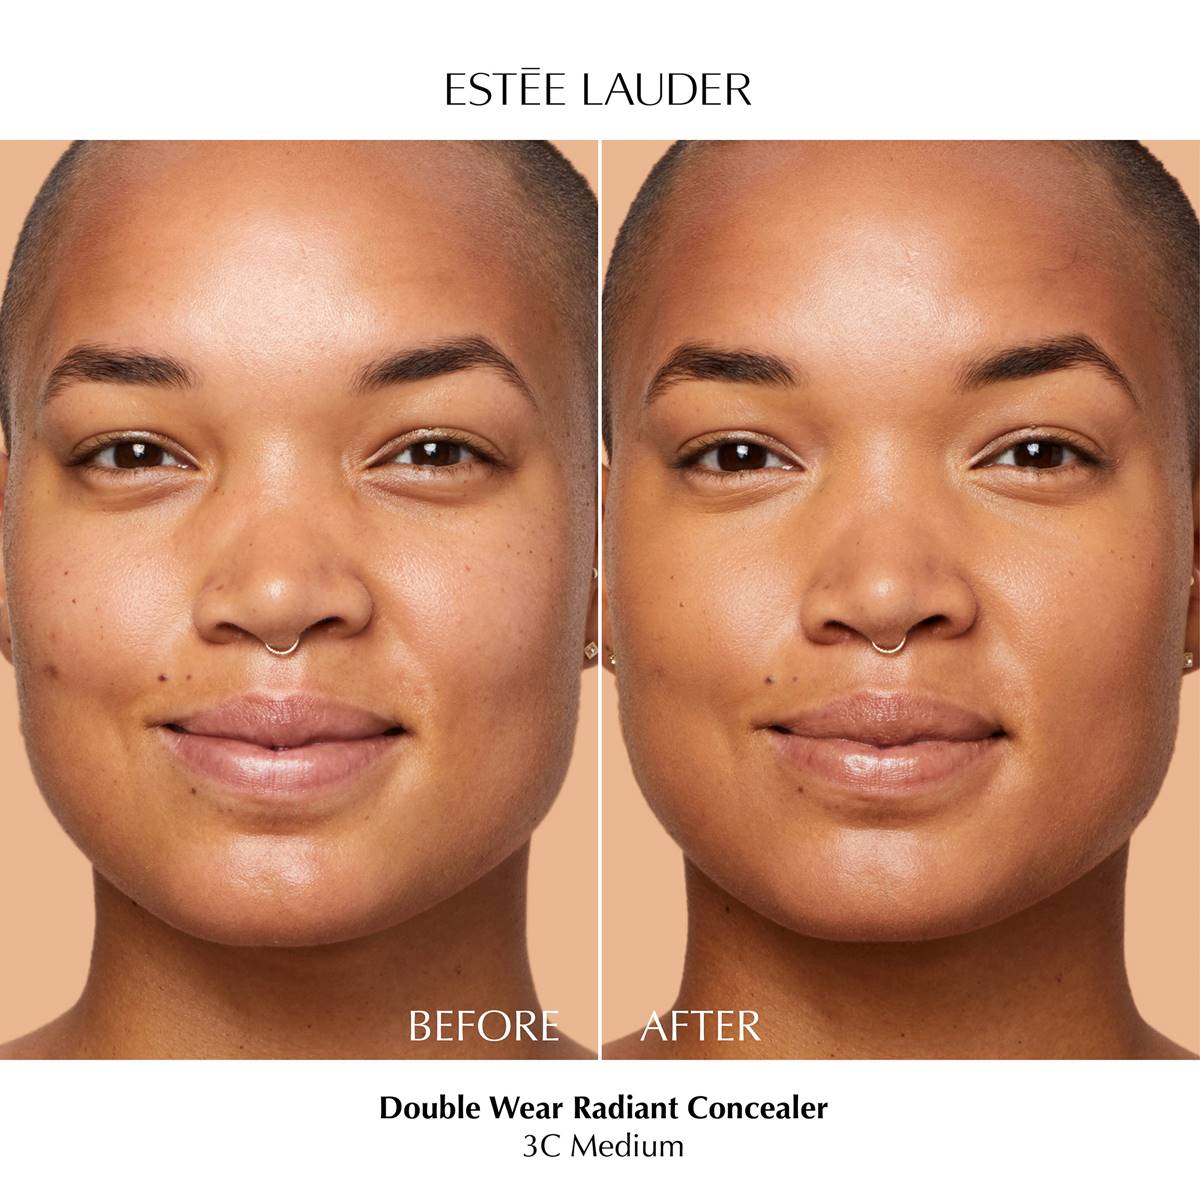 Estee Lauder(tm) Double Wear Radiant Concealer